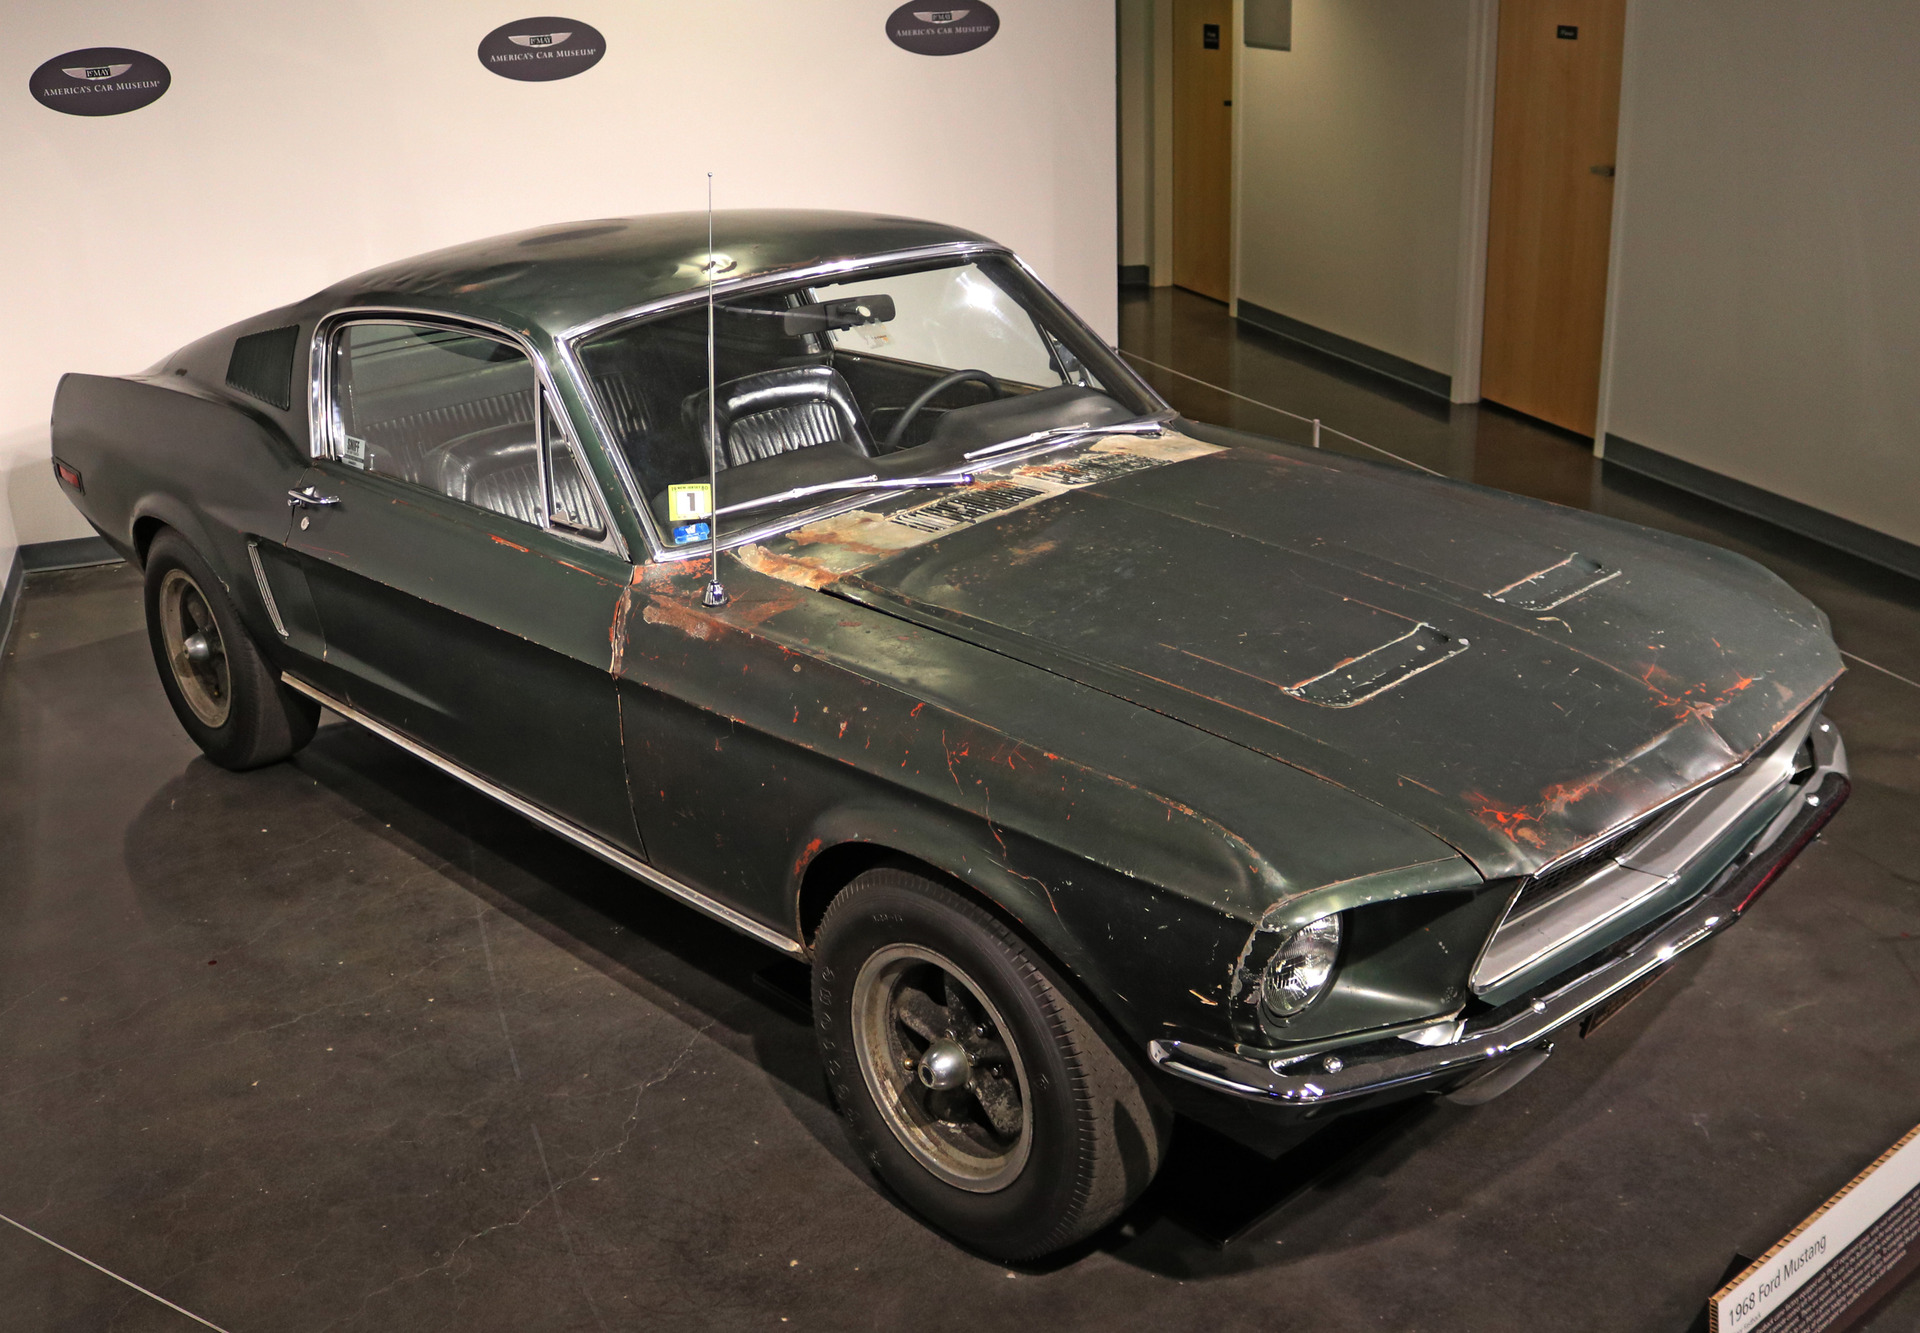 The rusted Mustang from Bullitt